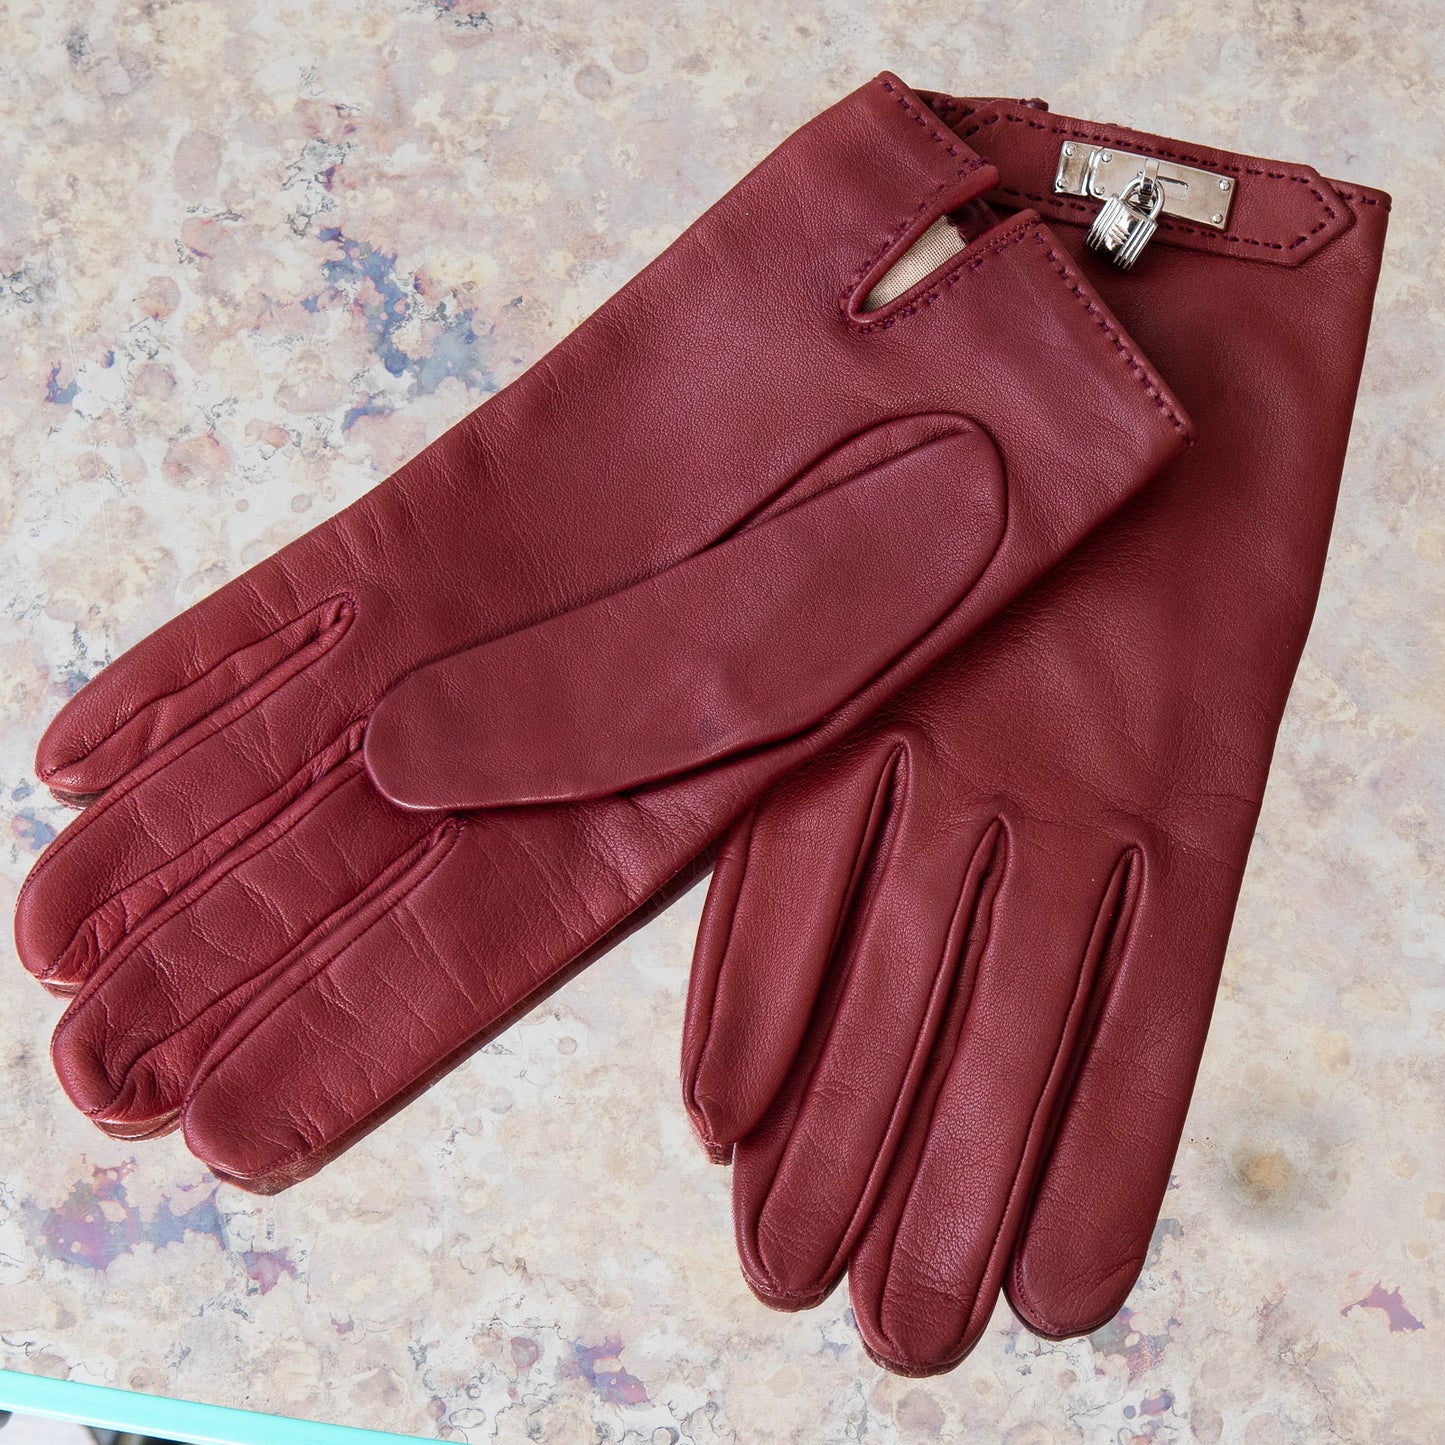 Hermes Red Lambskin Leather Soya Gloves Size 7.5